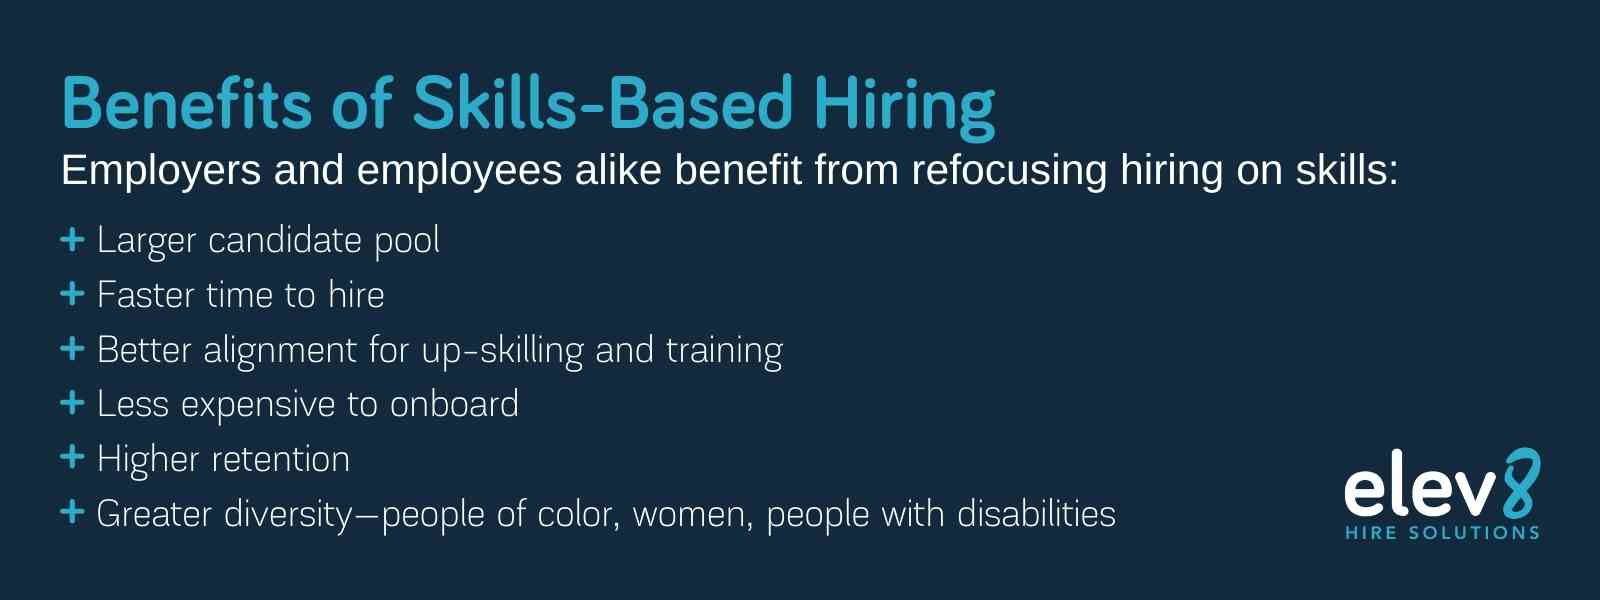 Benefits of skills based hiring